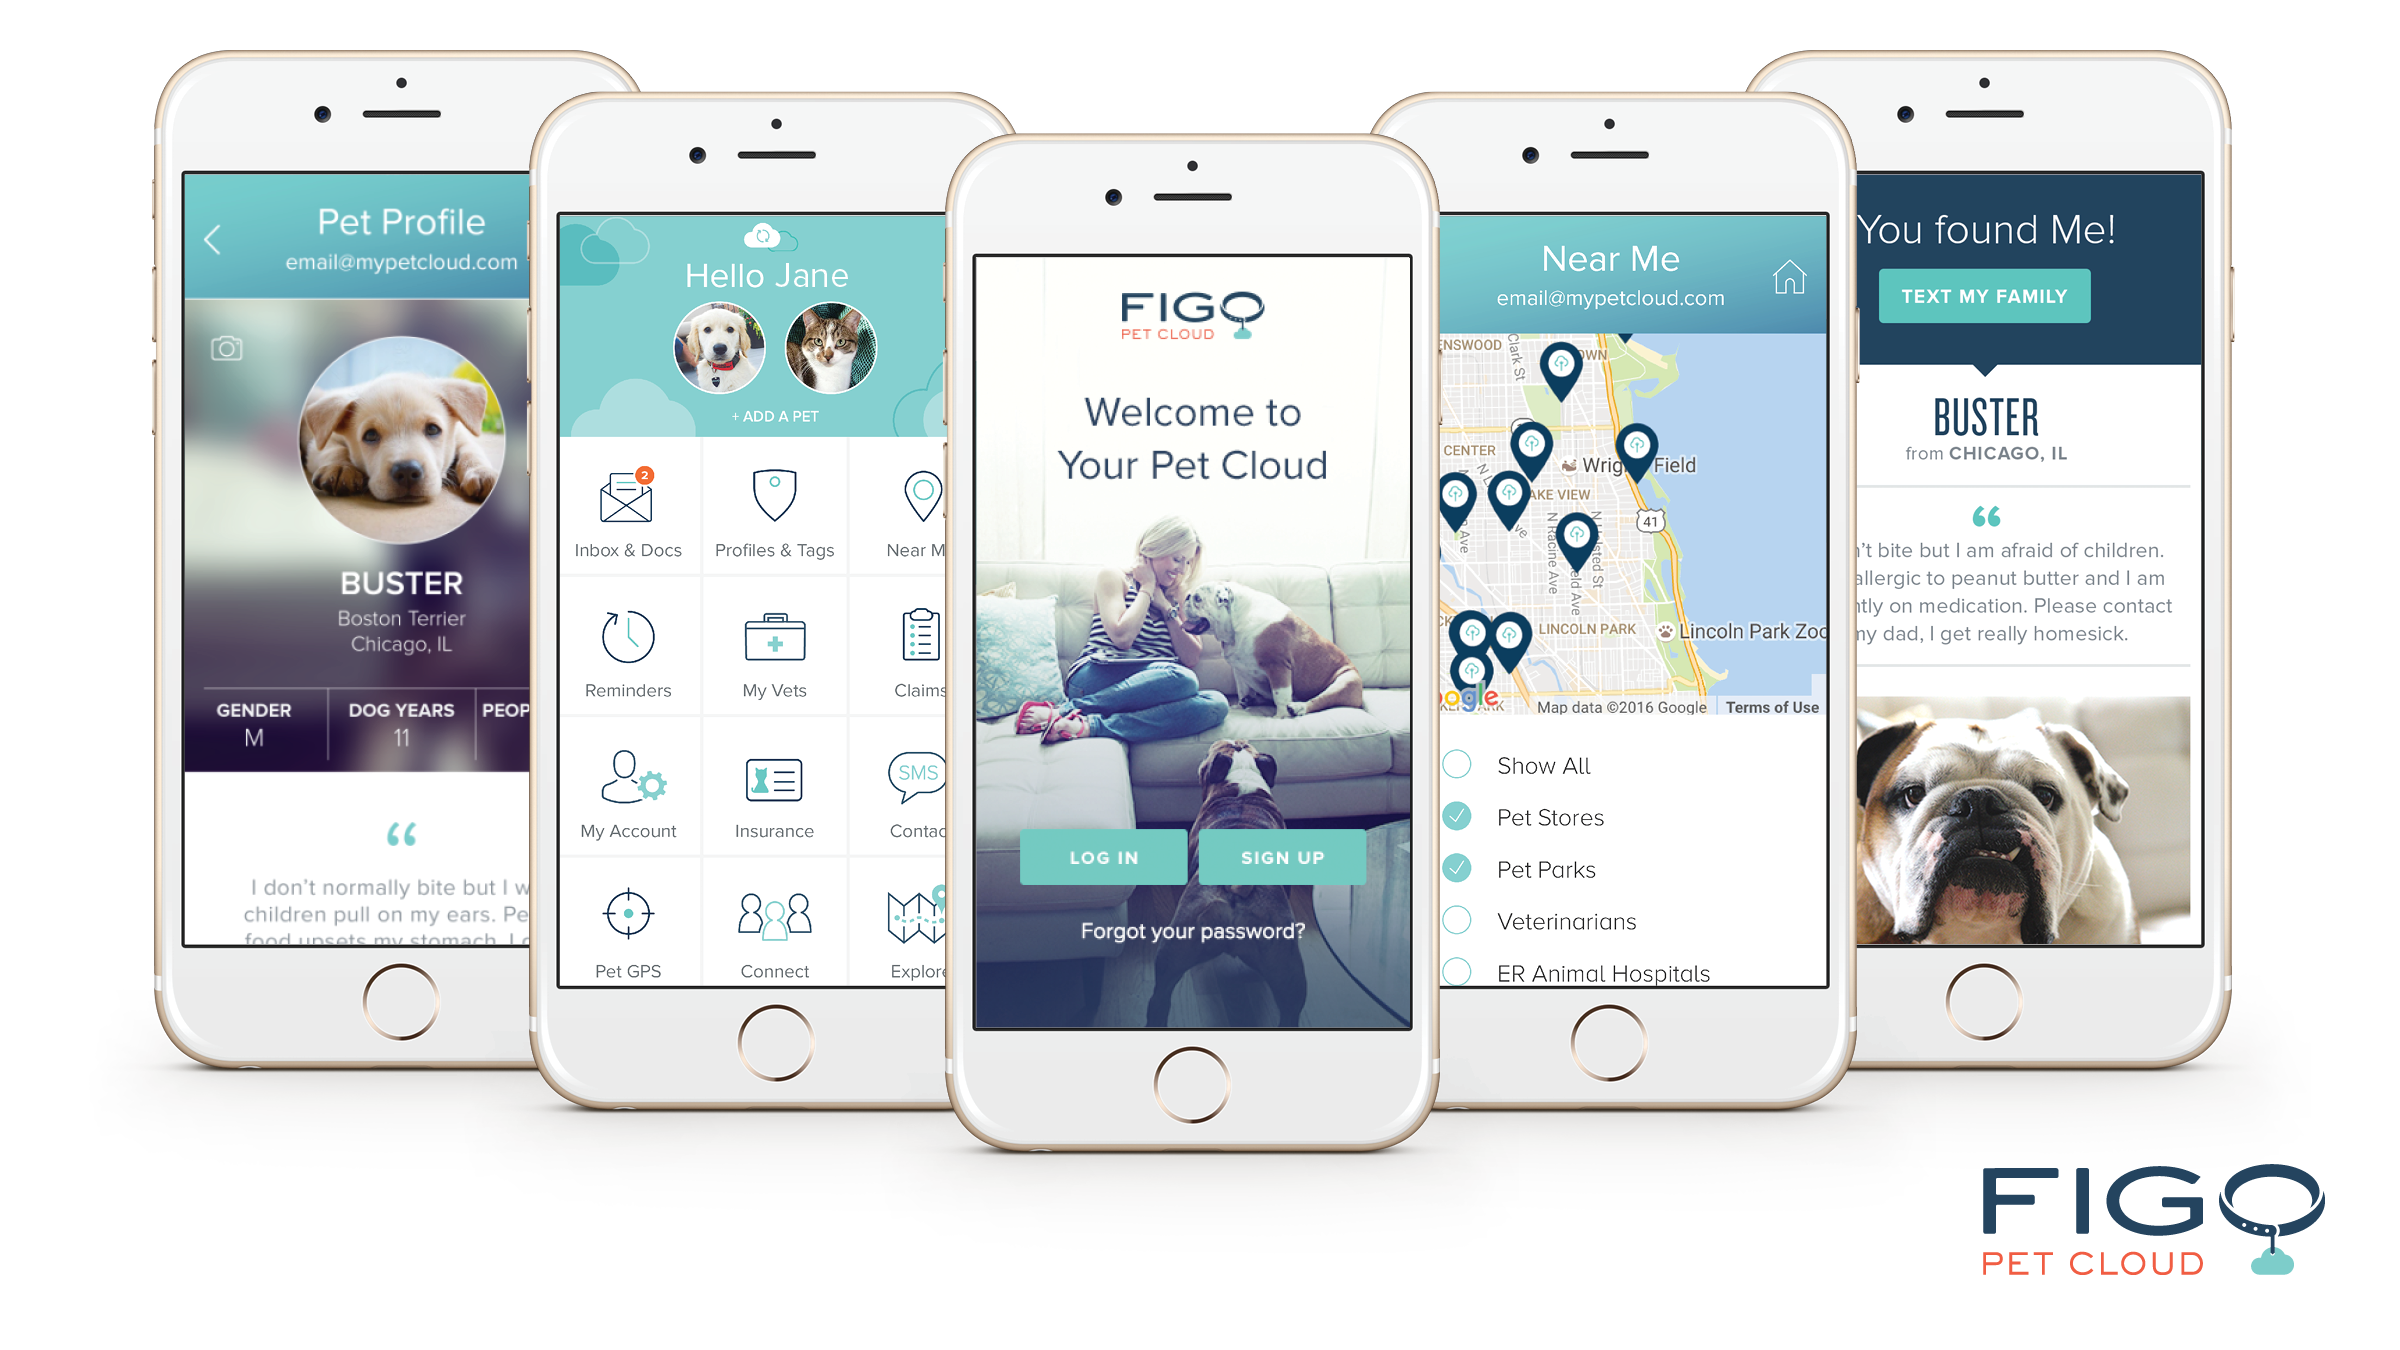 Features of the Figo Pet Cloud mobile app